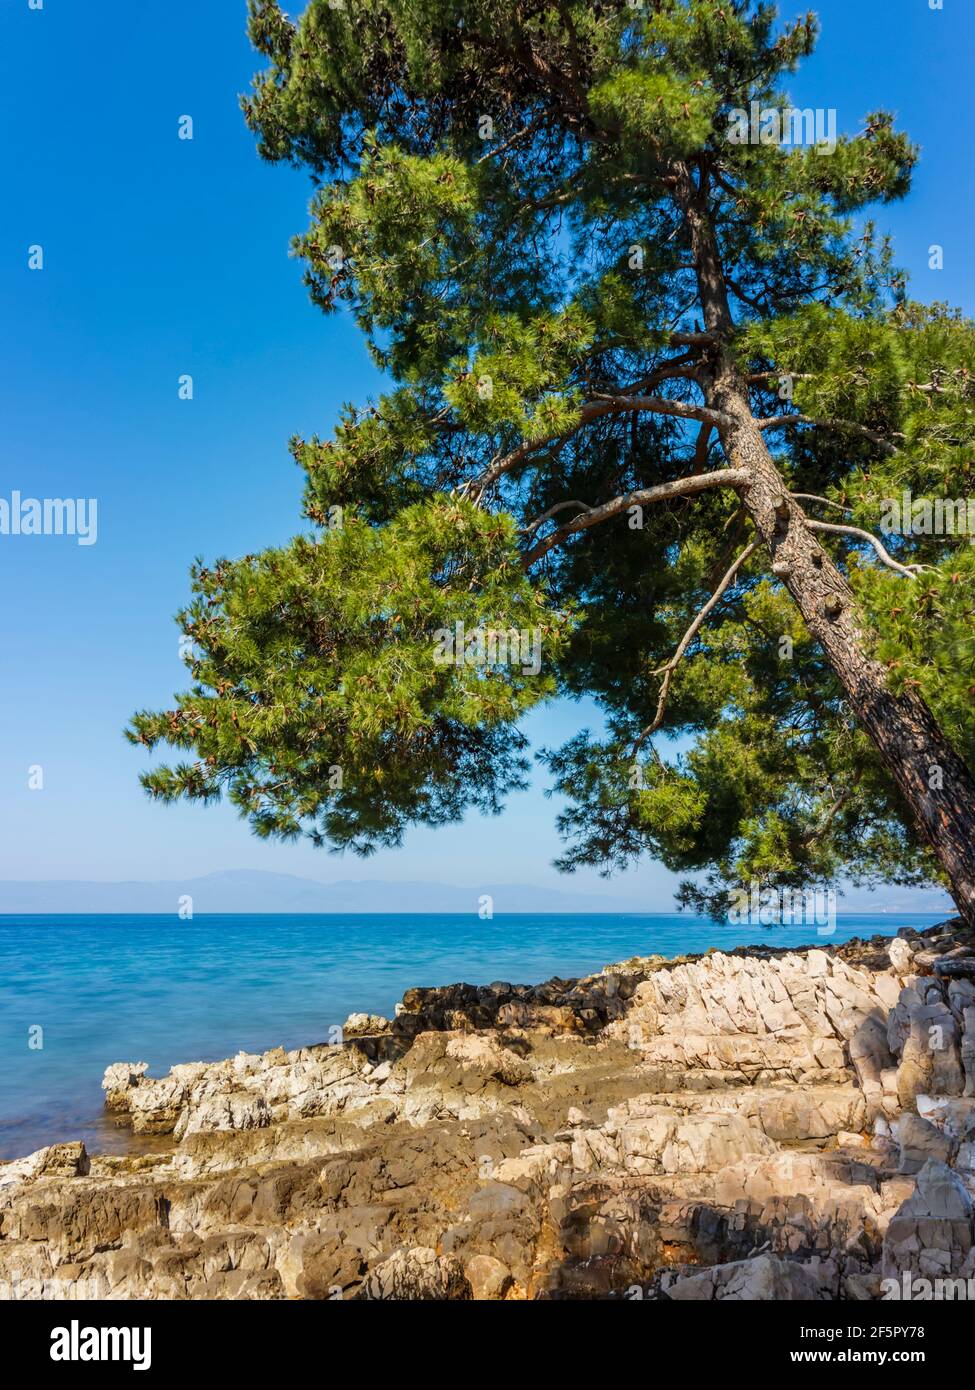 Coastline seaside Adriatic sea in Croatia Europe near Malinska on island Krk Stock Photo